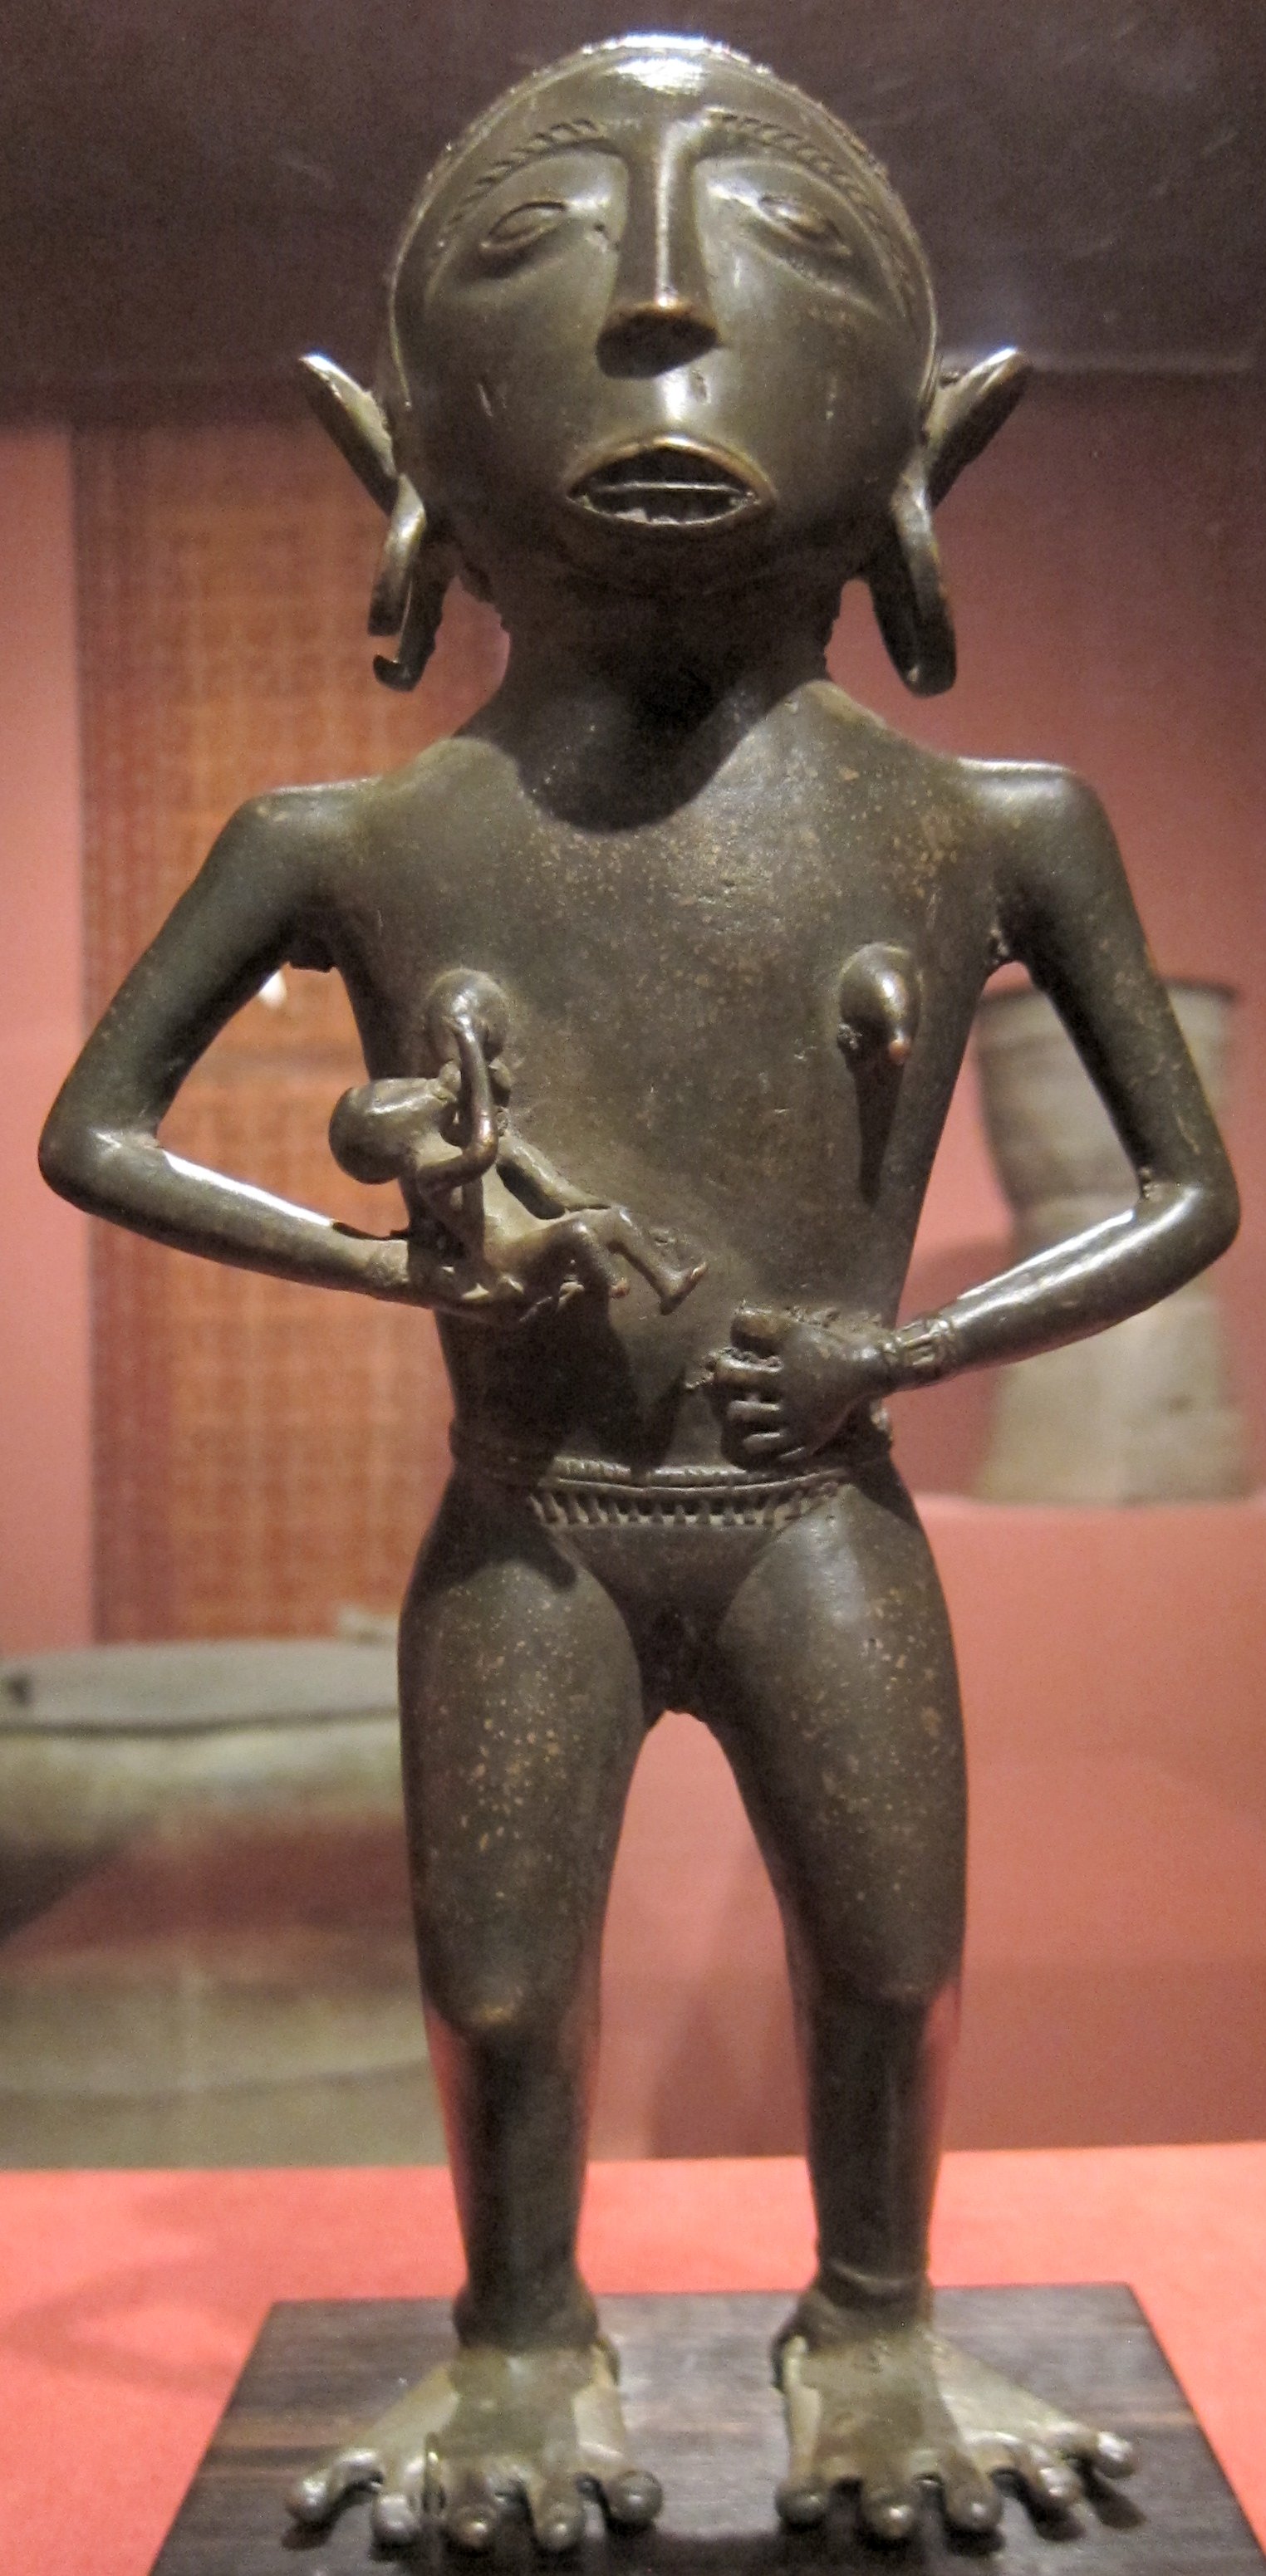 https://upload.wikimedia.org/wikipedia/commons/4/40/Maternity_figure%2C_Borneo%2C_c._200_BCE%2C_bronze%2C_Honolulu_Museum_of_Art.JPG